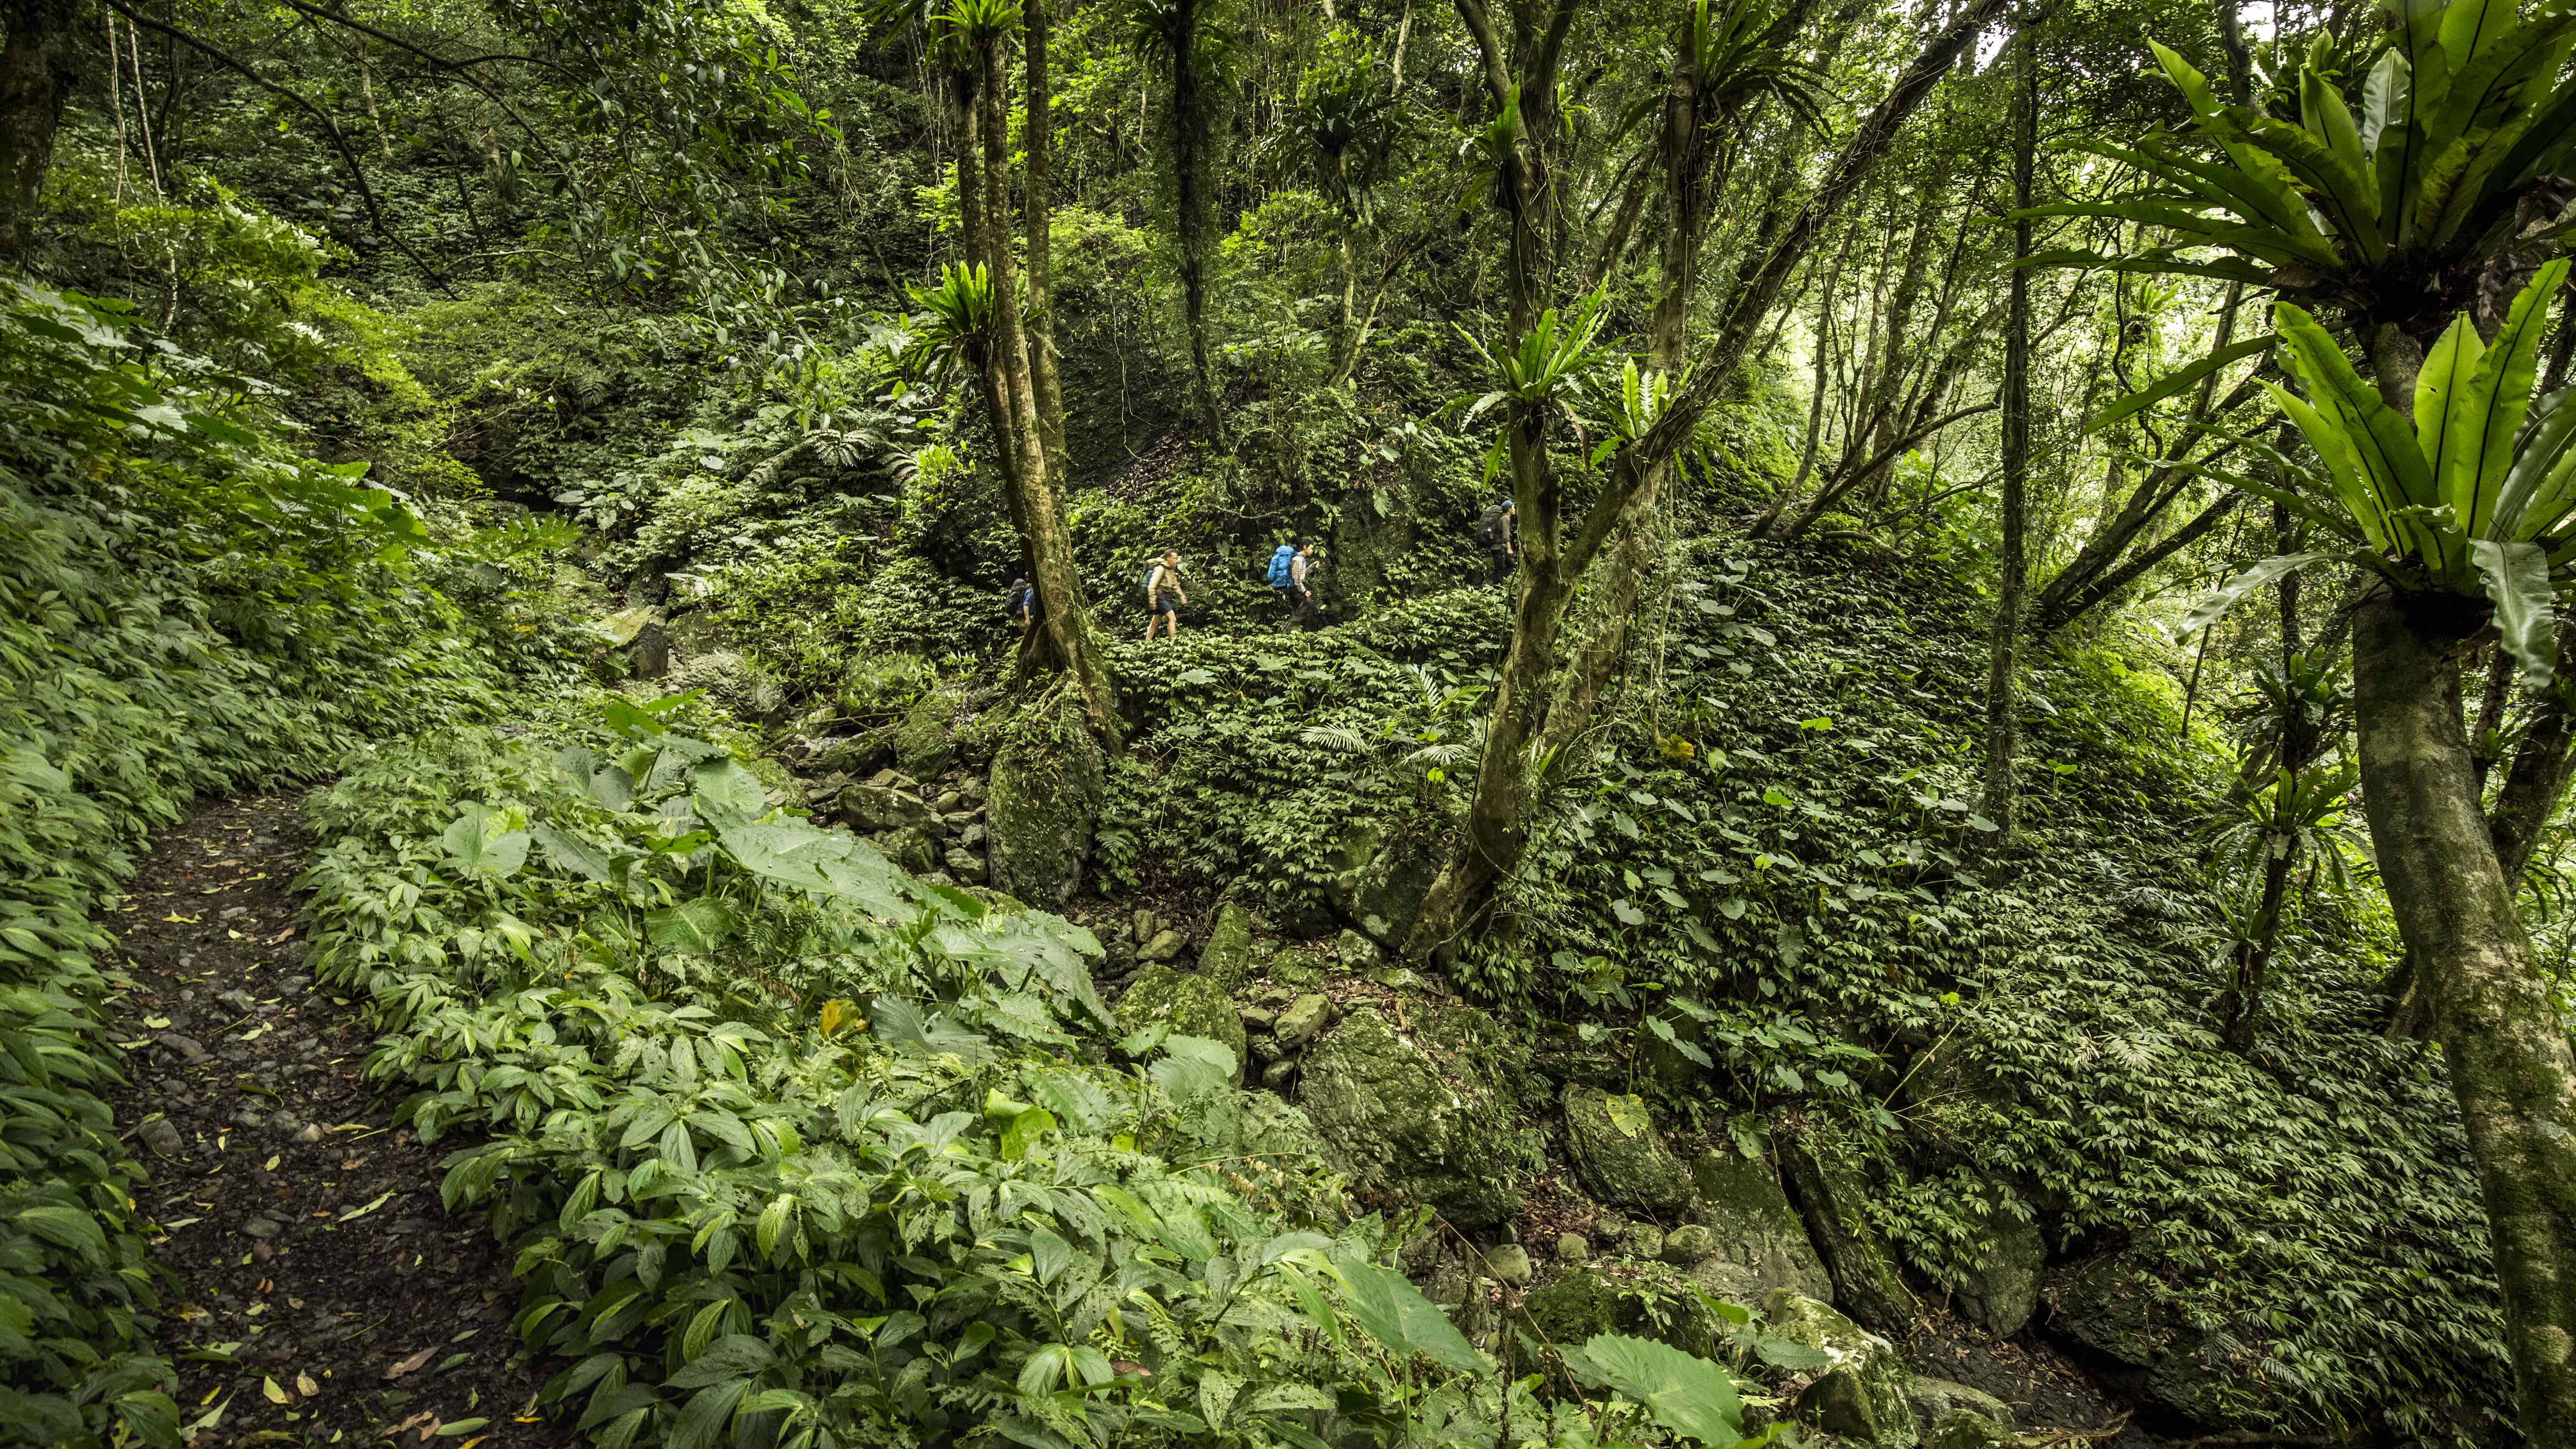 Trekking in the rainforest